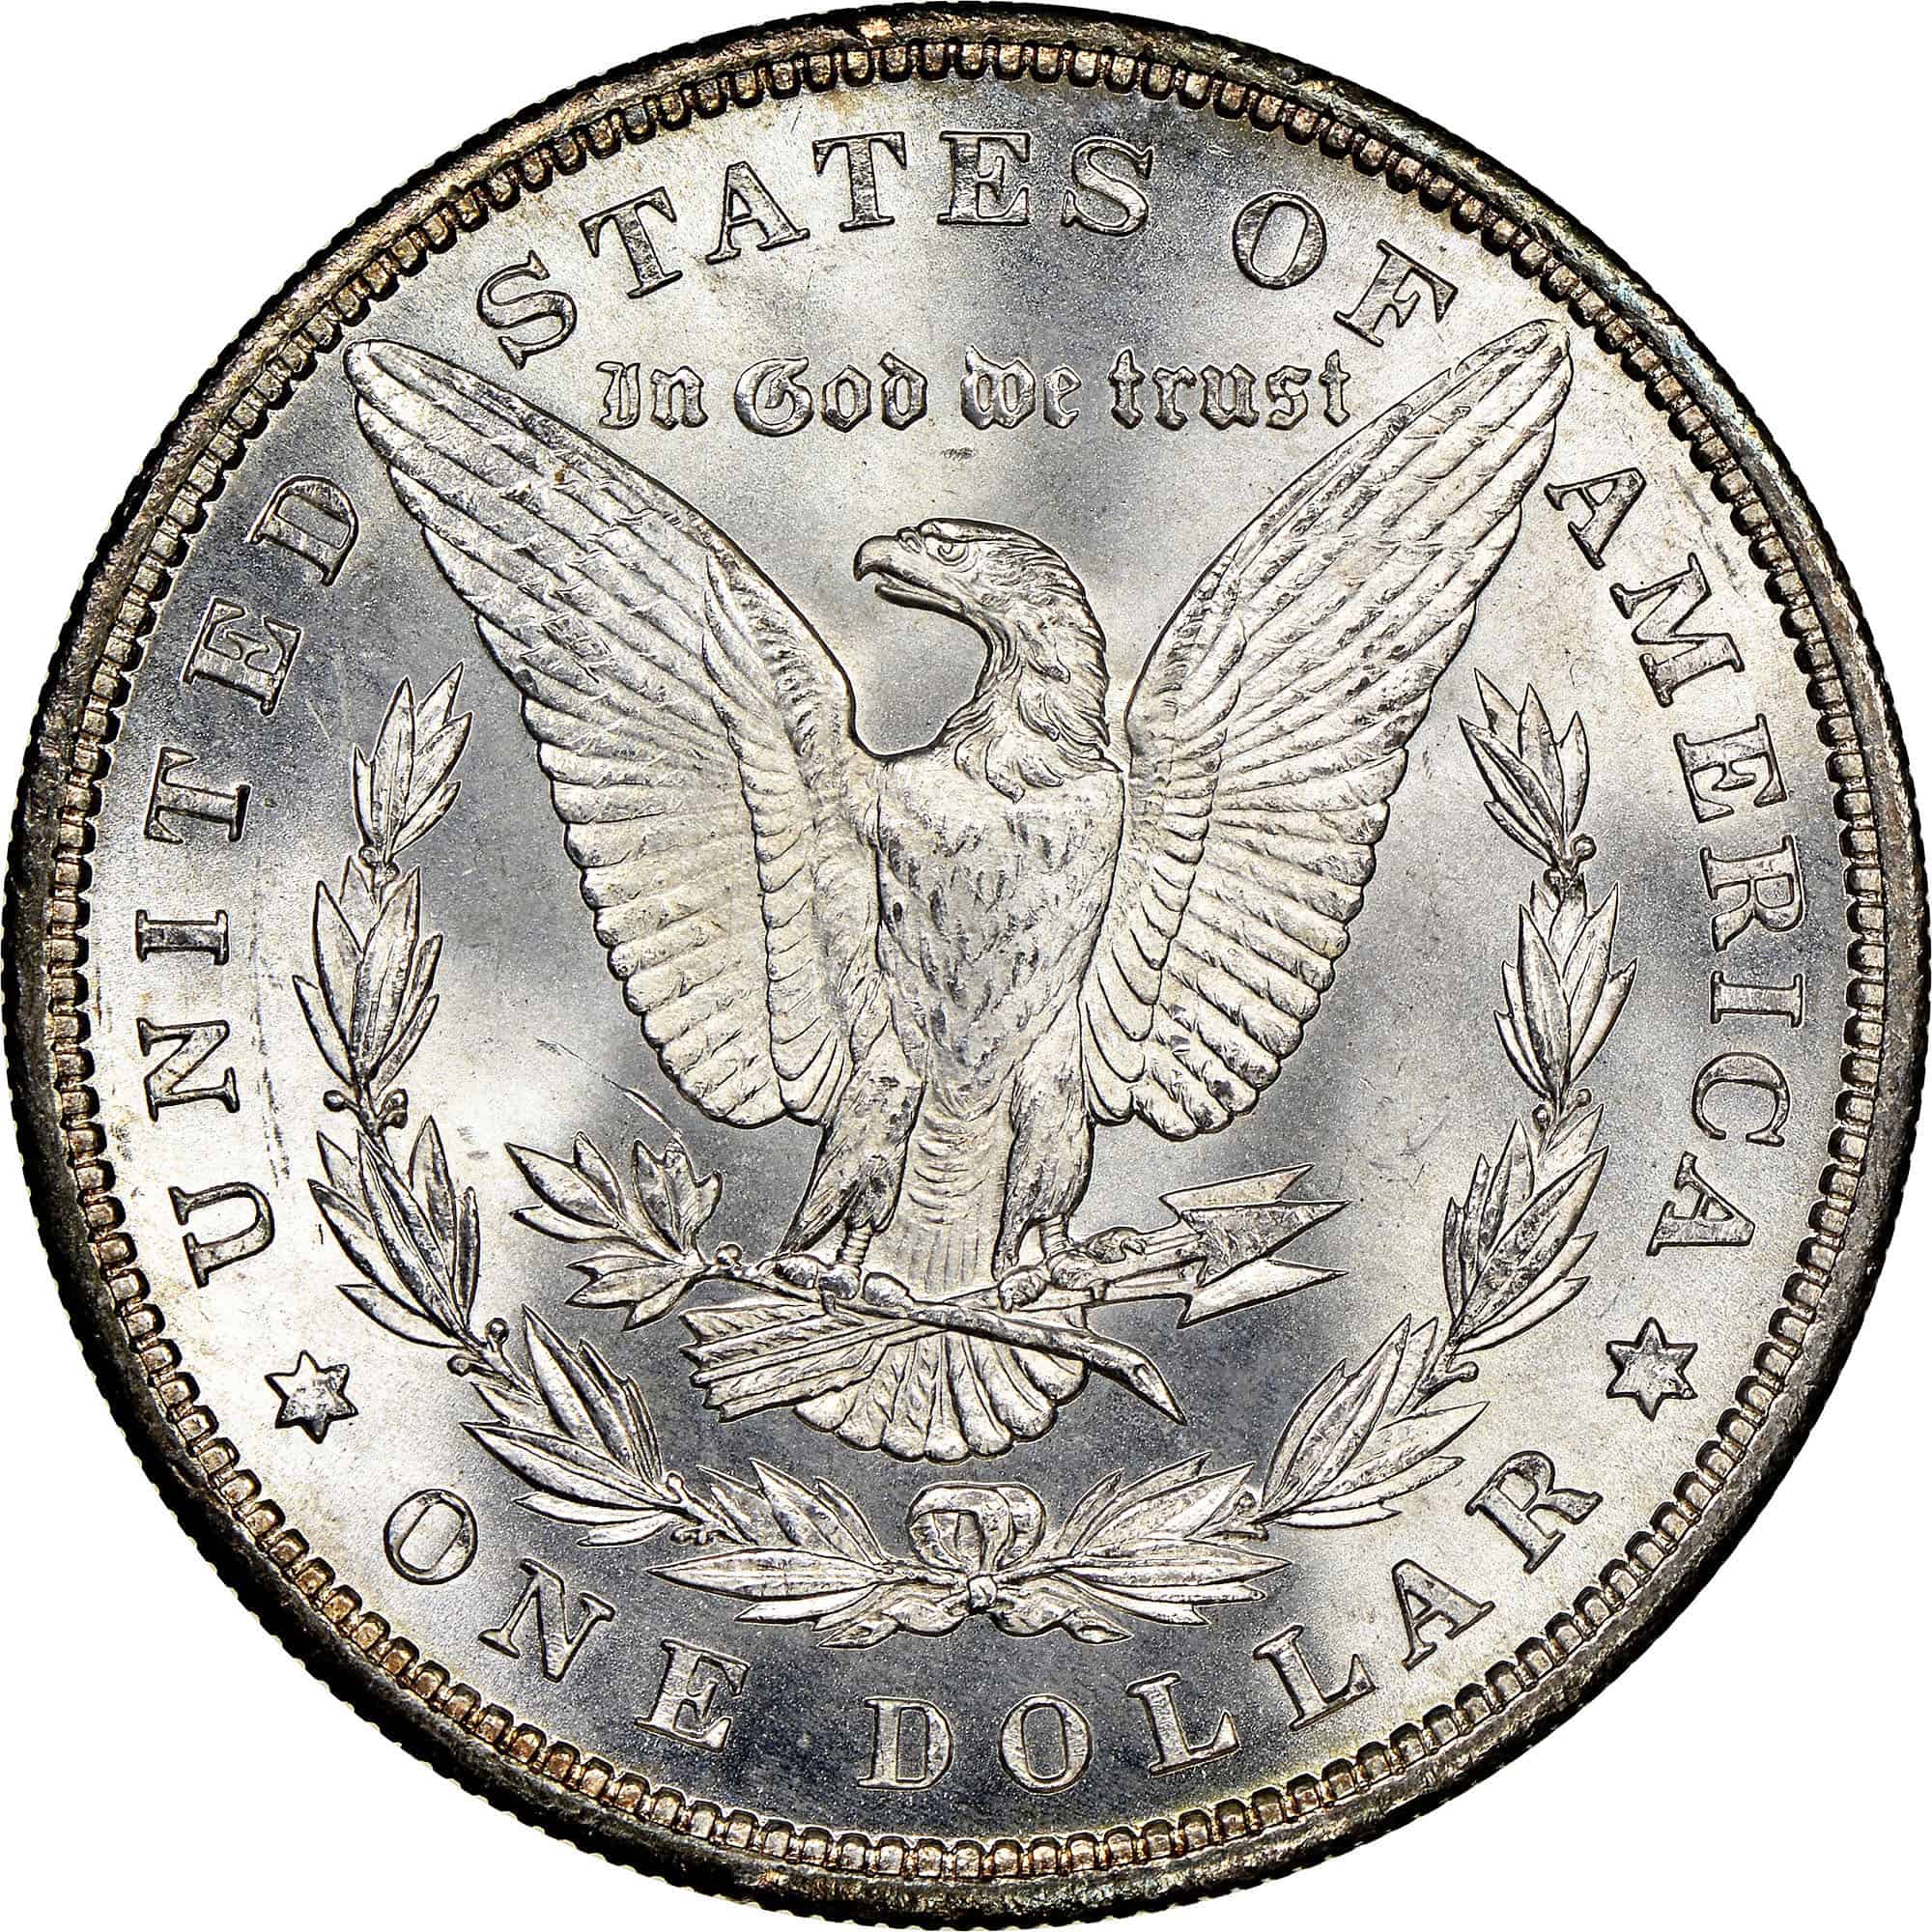 1899 (P) No Mint Mark Silver Dollar